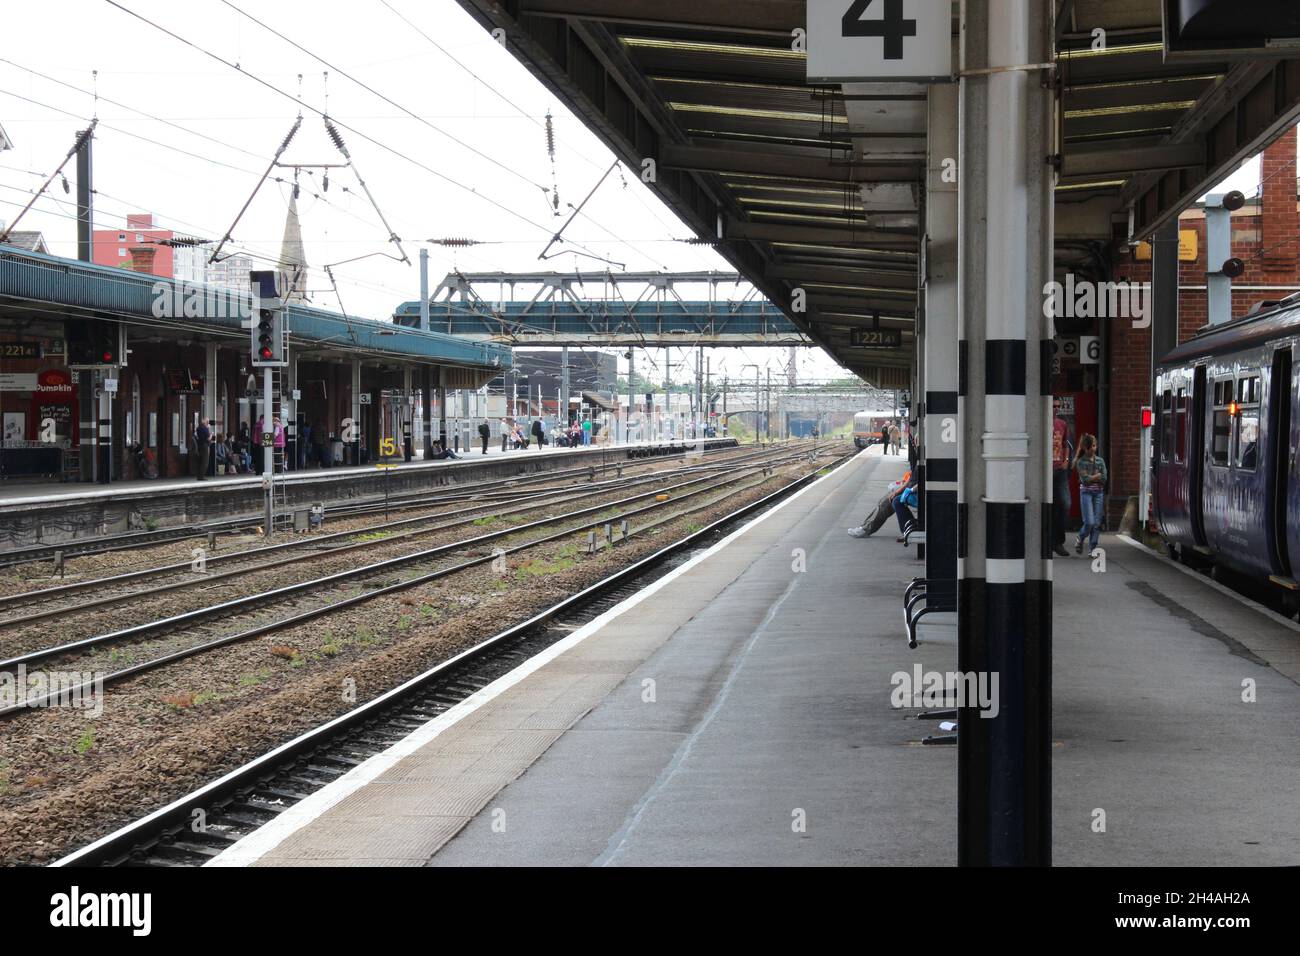 Railway Station, Platforms Stock Photo